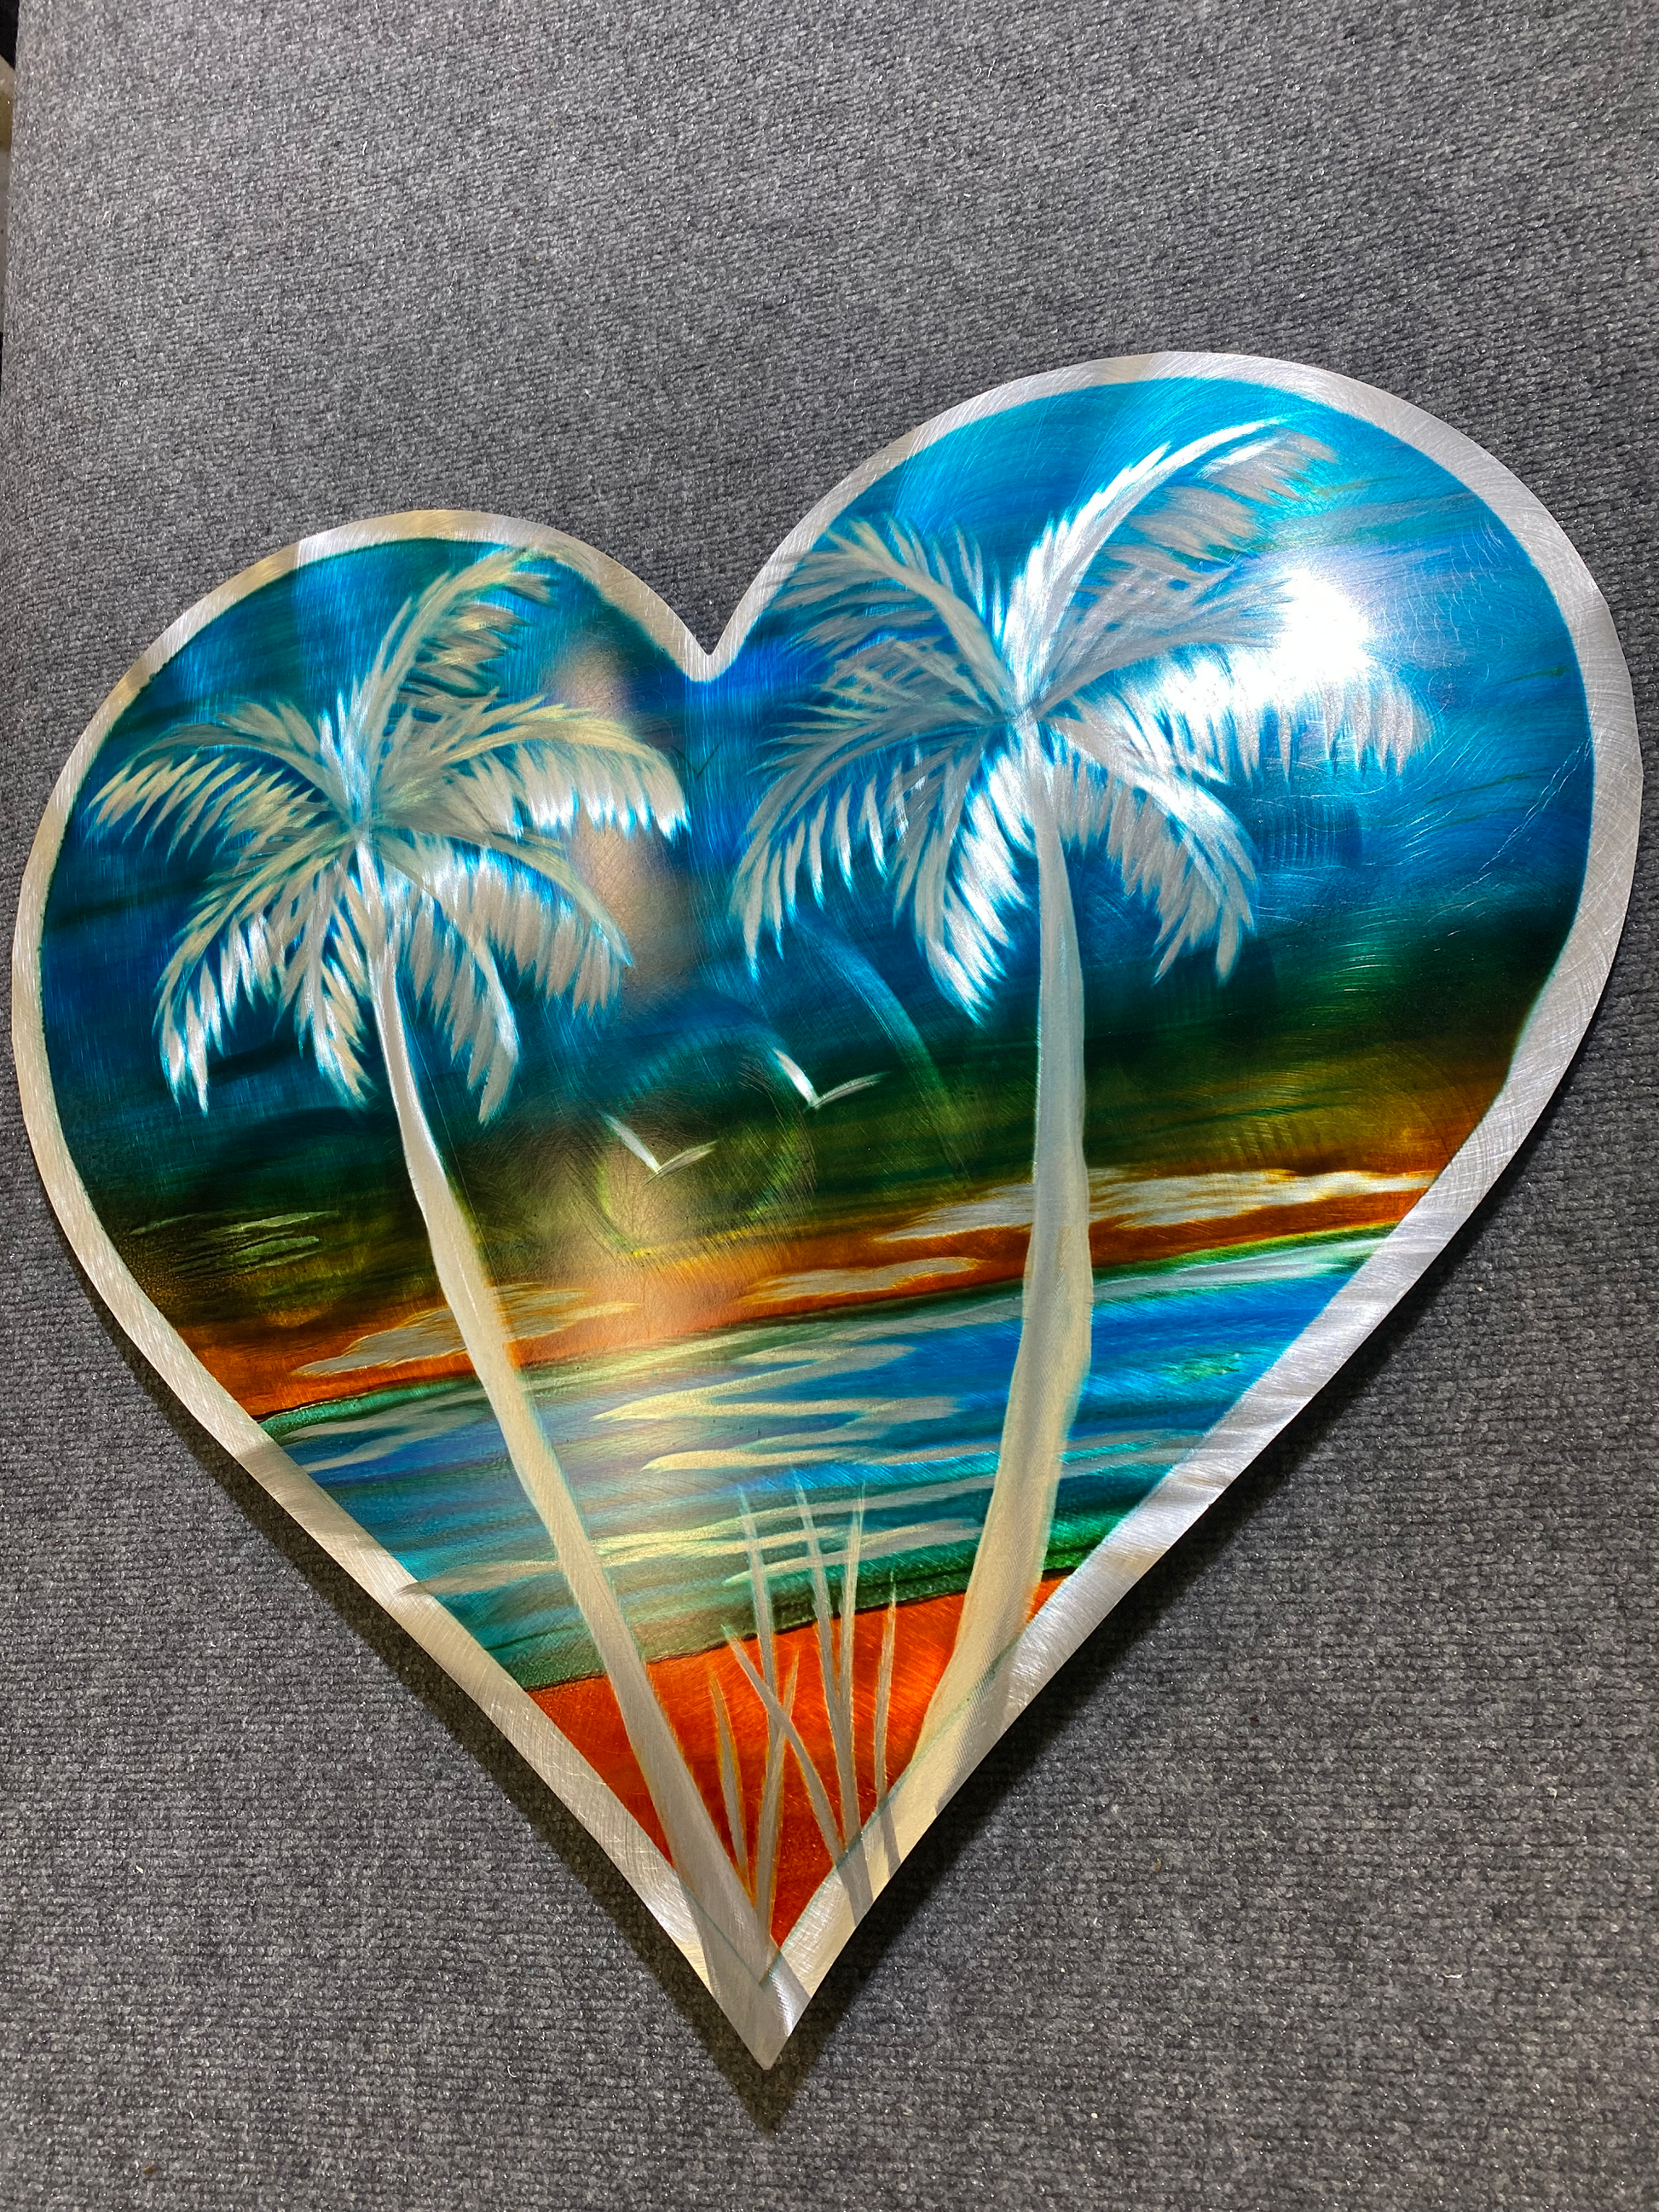 Tropical Blue Love Heart PETE KOZA METAL ART